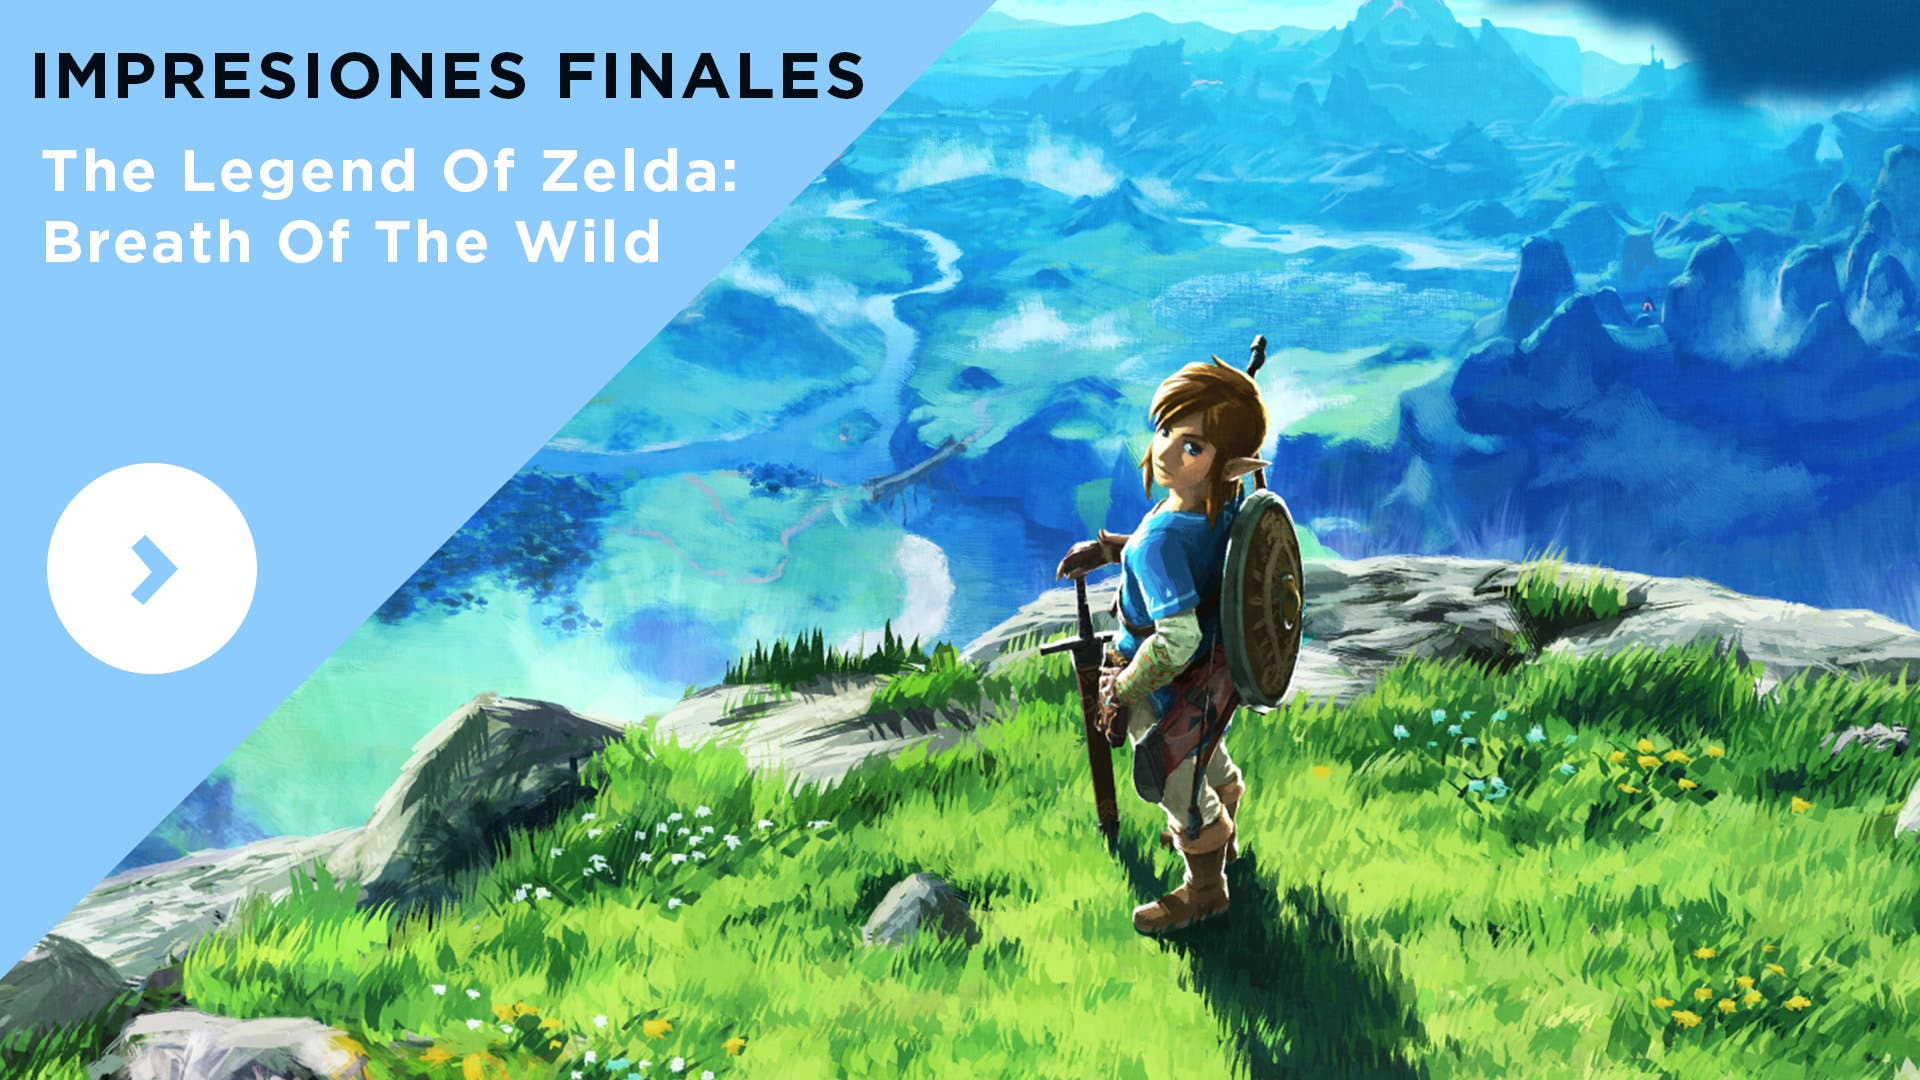 [Impresiones finales] ‘The Legend Of Zelda: Breath of the Wild’